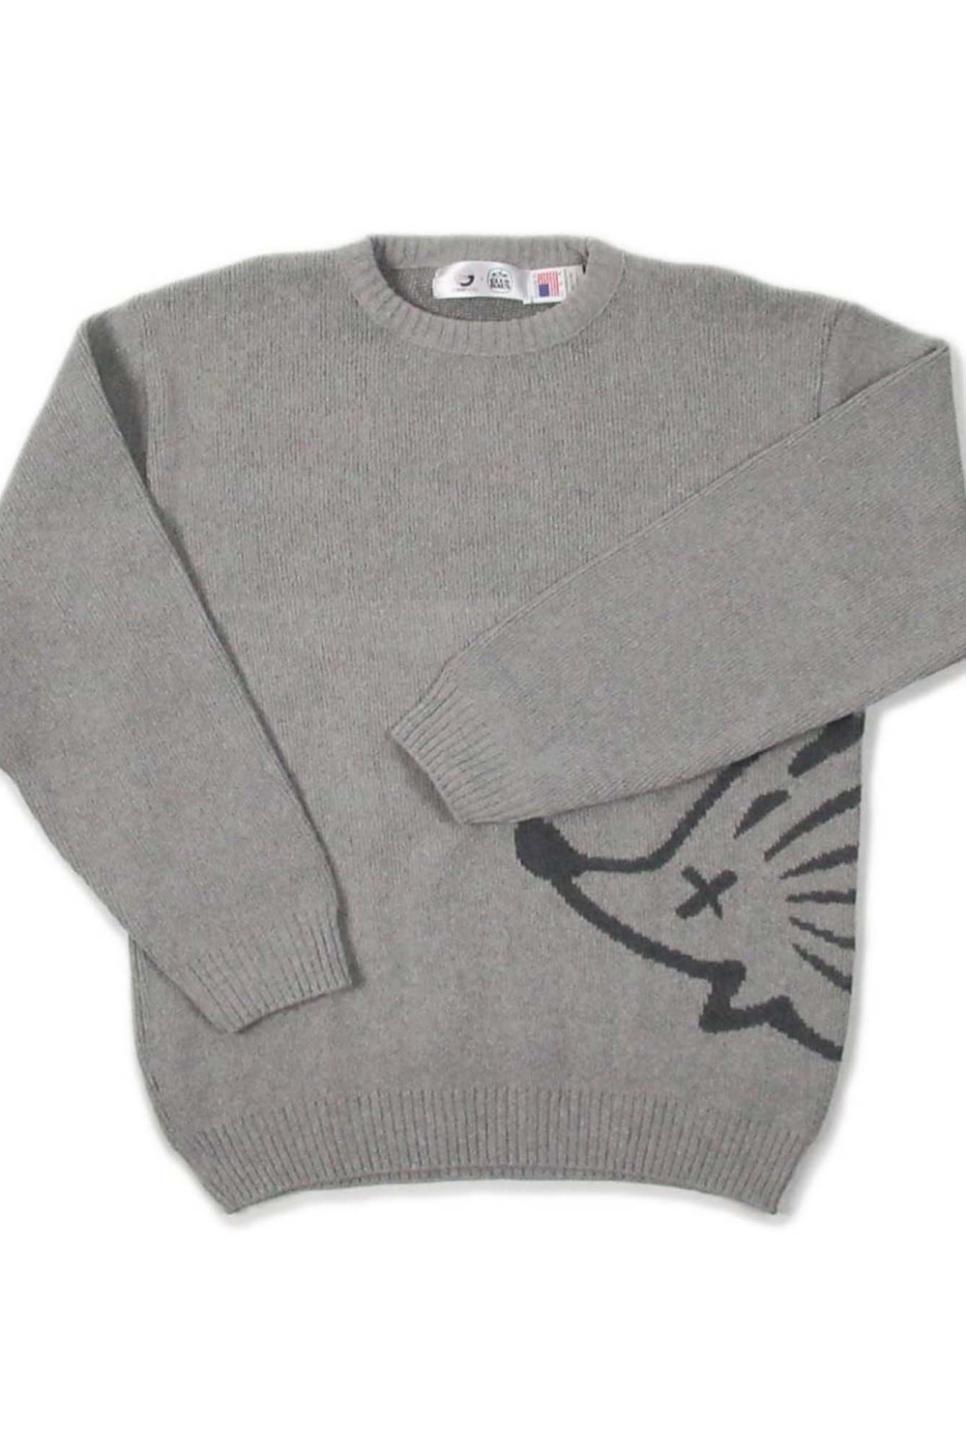 Foray X Clubhaus Sweater